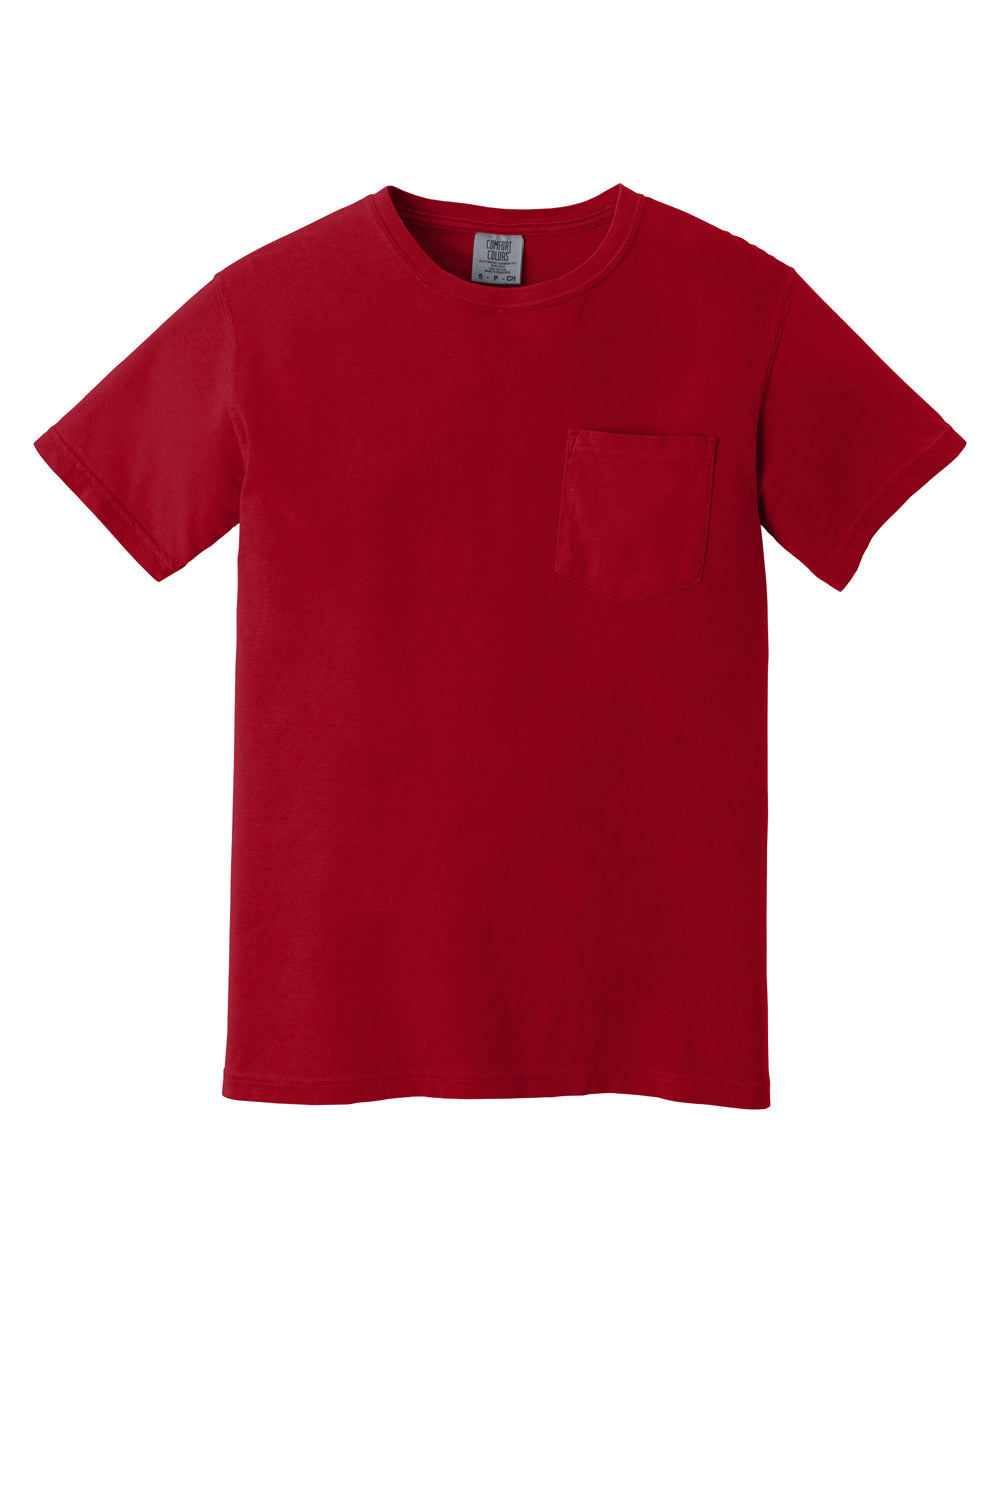 Comfort Colors Mens Short Sleeve Crewneck T-Shirt w/ Pocket Red Flat Front